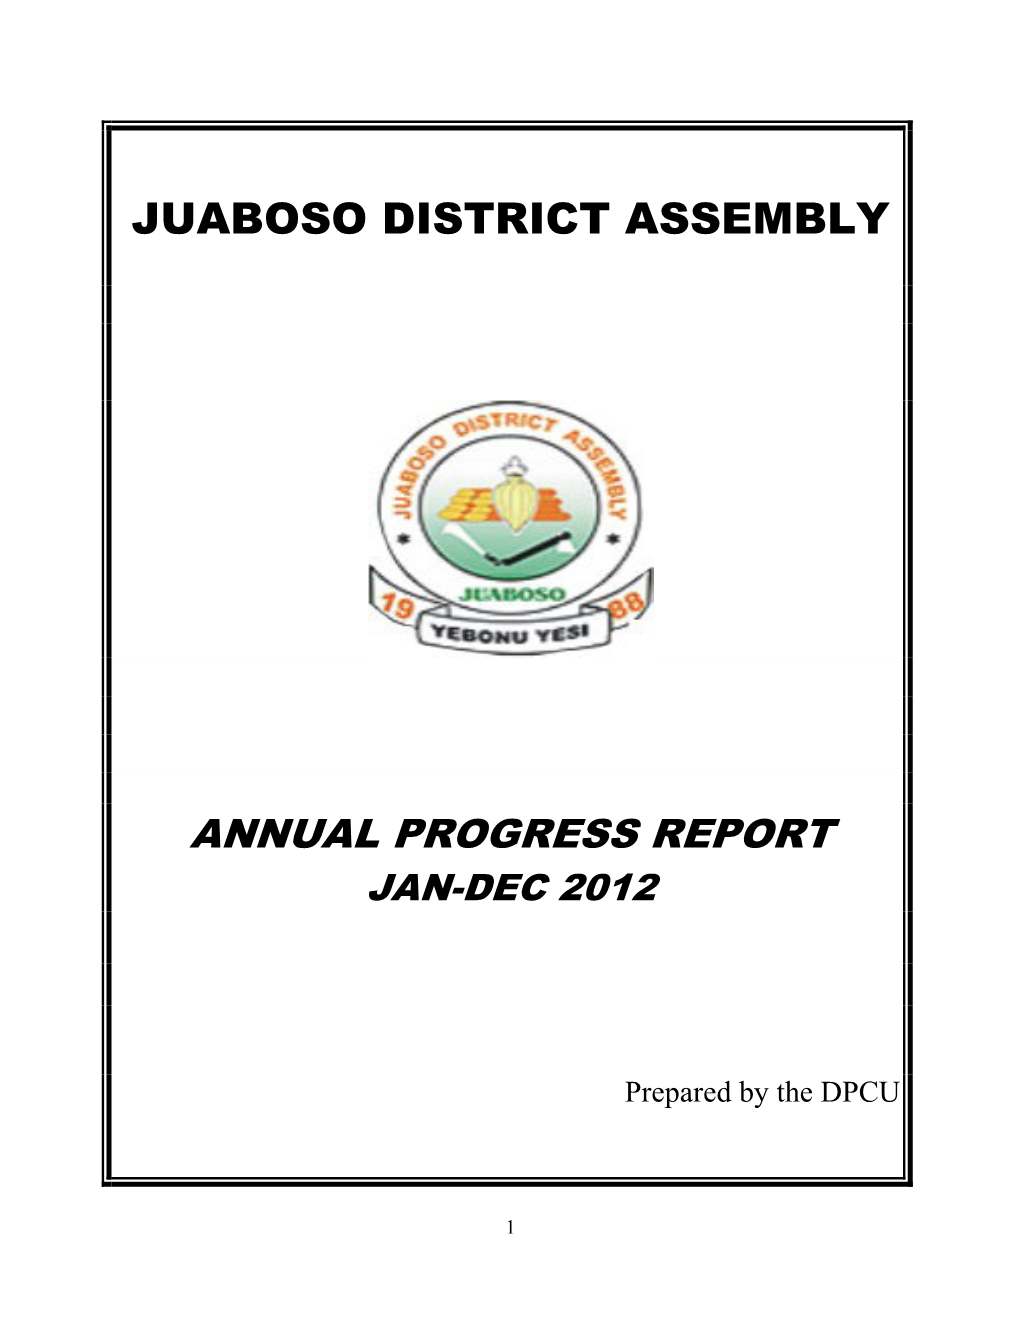 Juaboso District Assembly